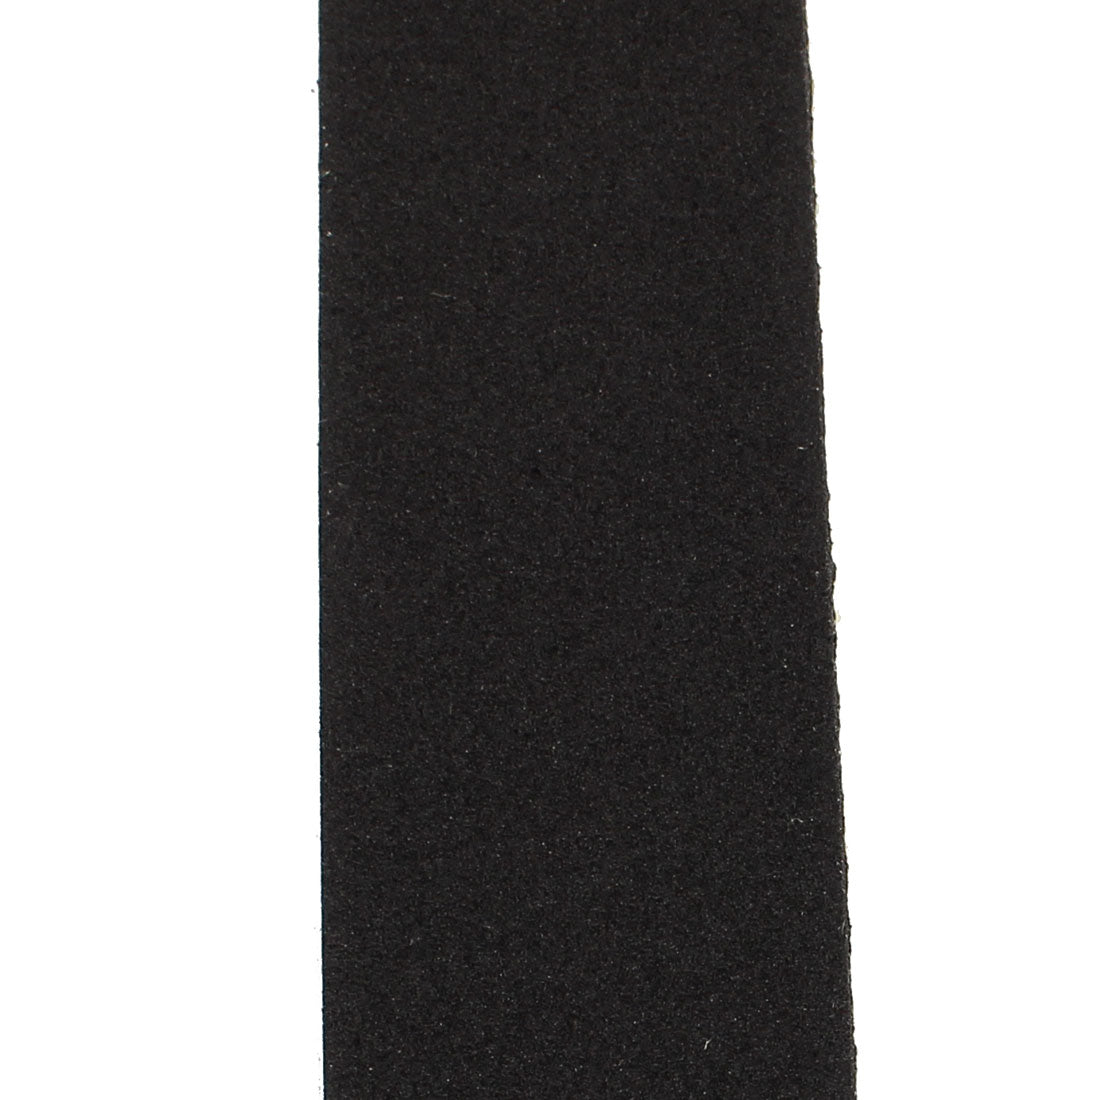 uxcell Uxcell 25mm Width 1mm Thickness Single Side Sponge Foam Tape Black 10 Meter Length